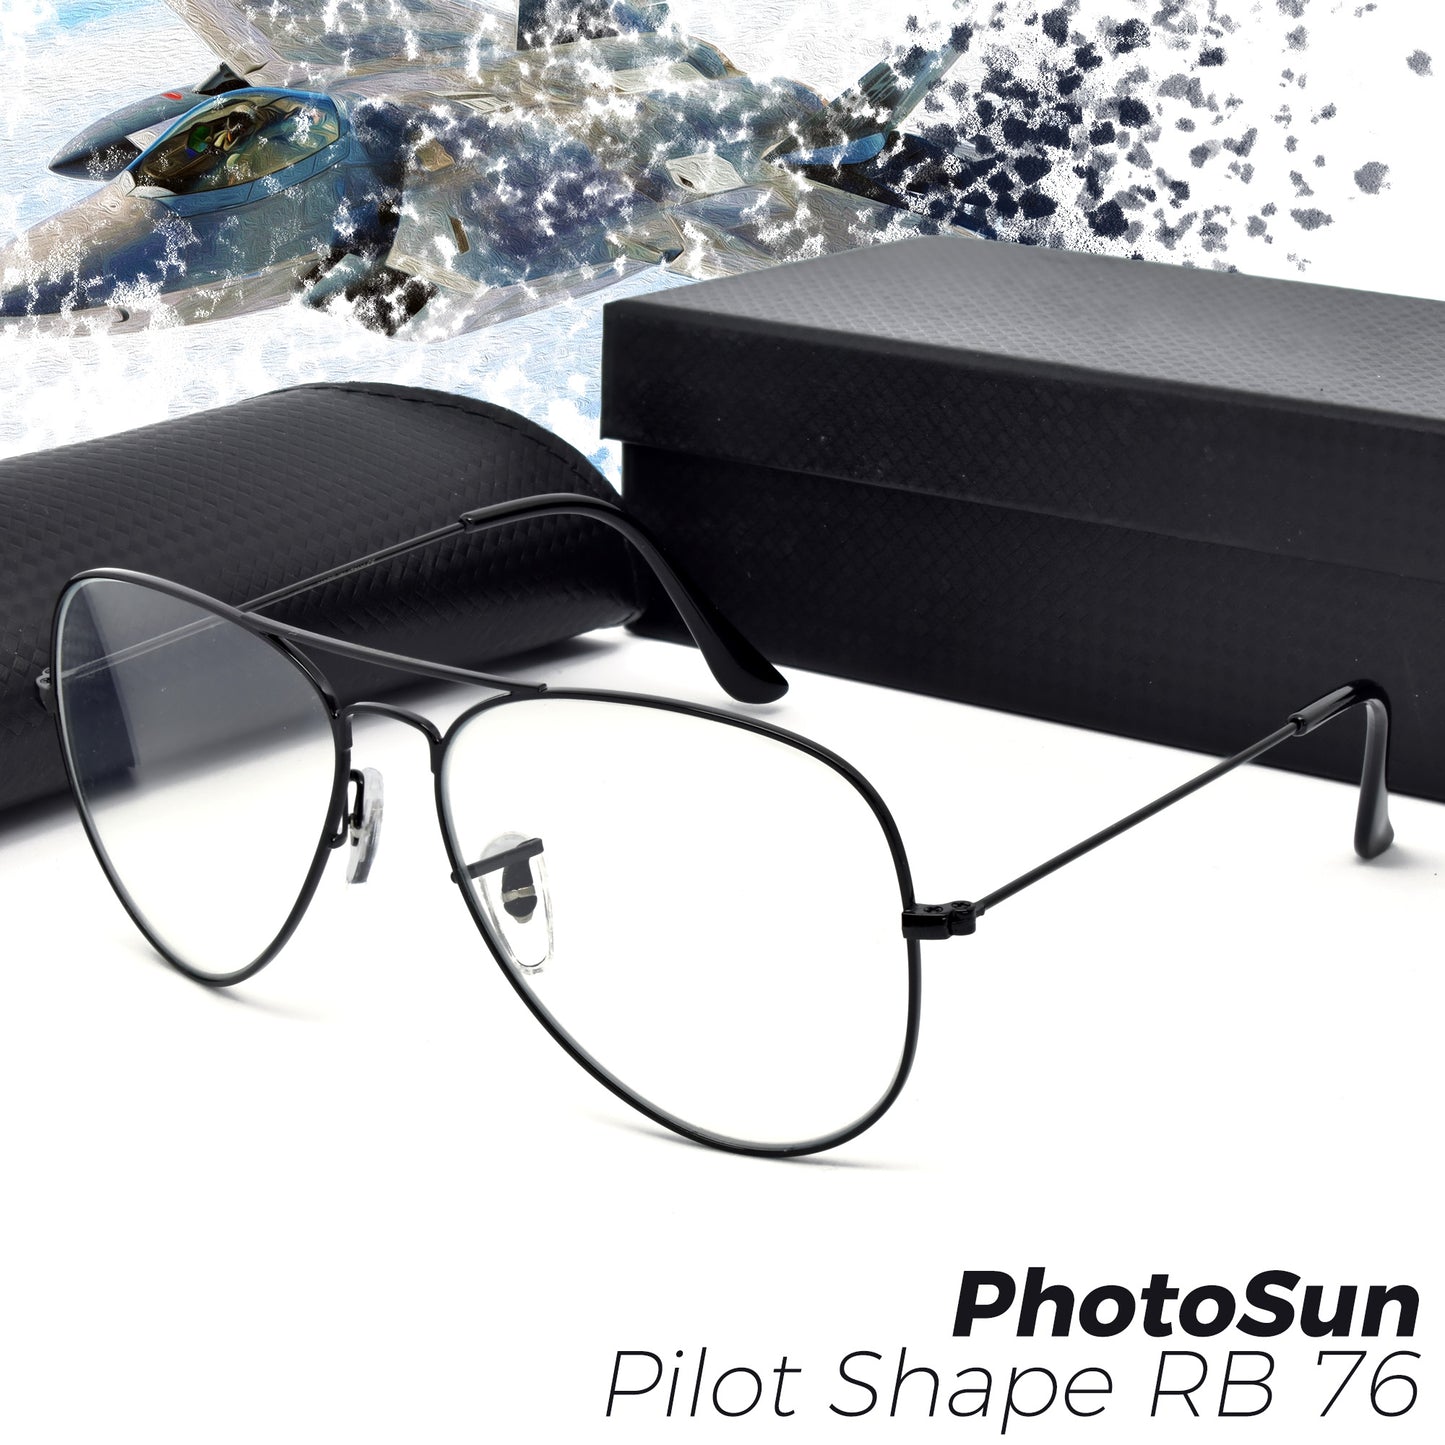 AO Style Pilot Shape RB Sunglass for Men | RB 76 | PhotoSun Sunglass